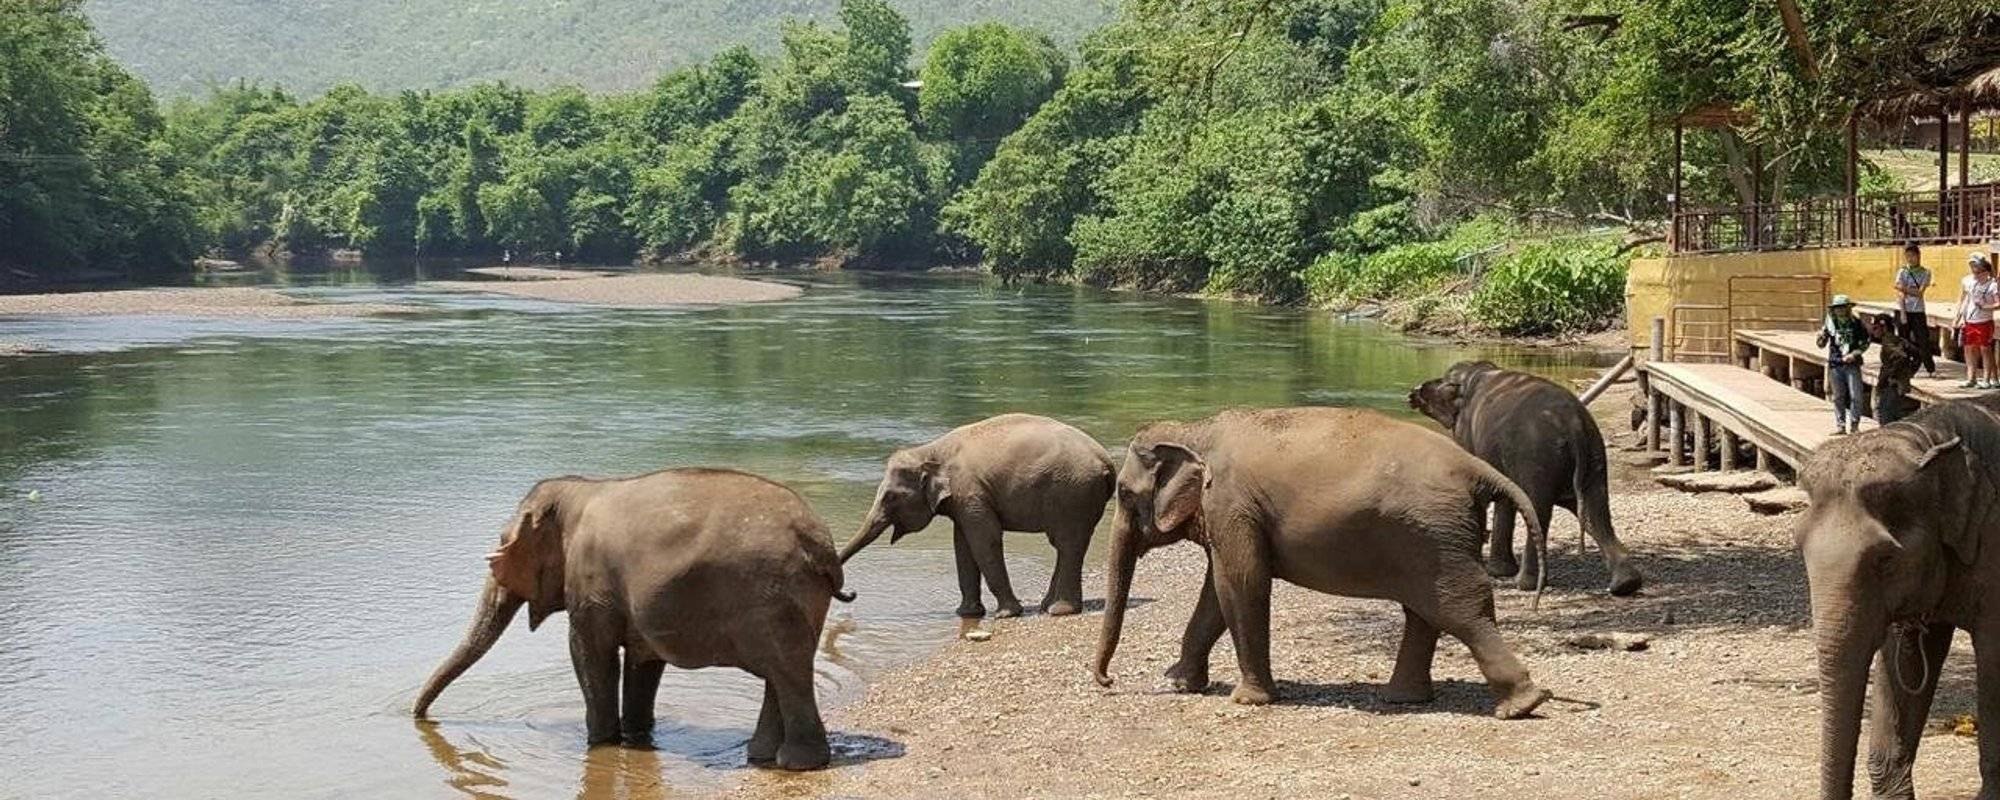 Throwback Thursday's: Elephants World, Kanchanaburi